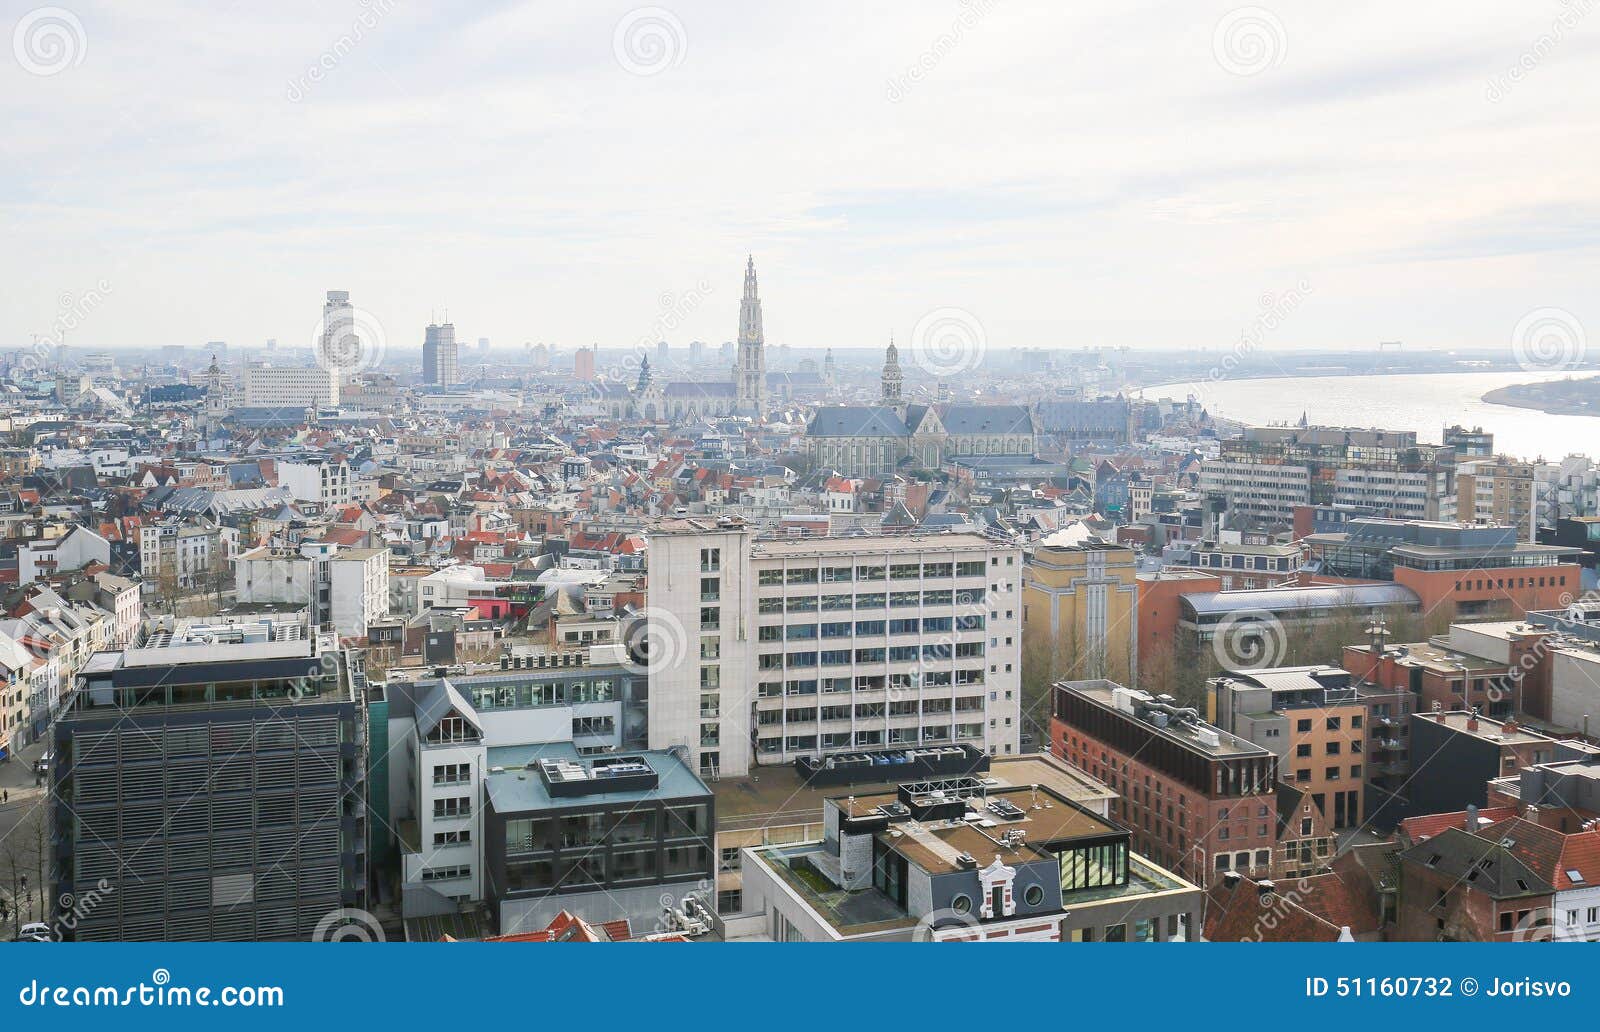 Aerial View On The Center Of Antwerp, Belgium Stock Photo ...